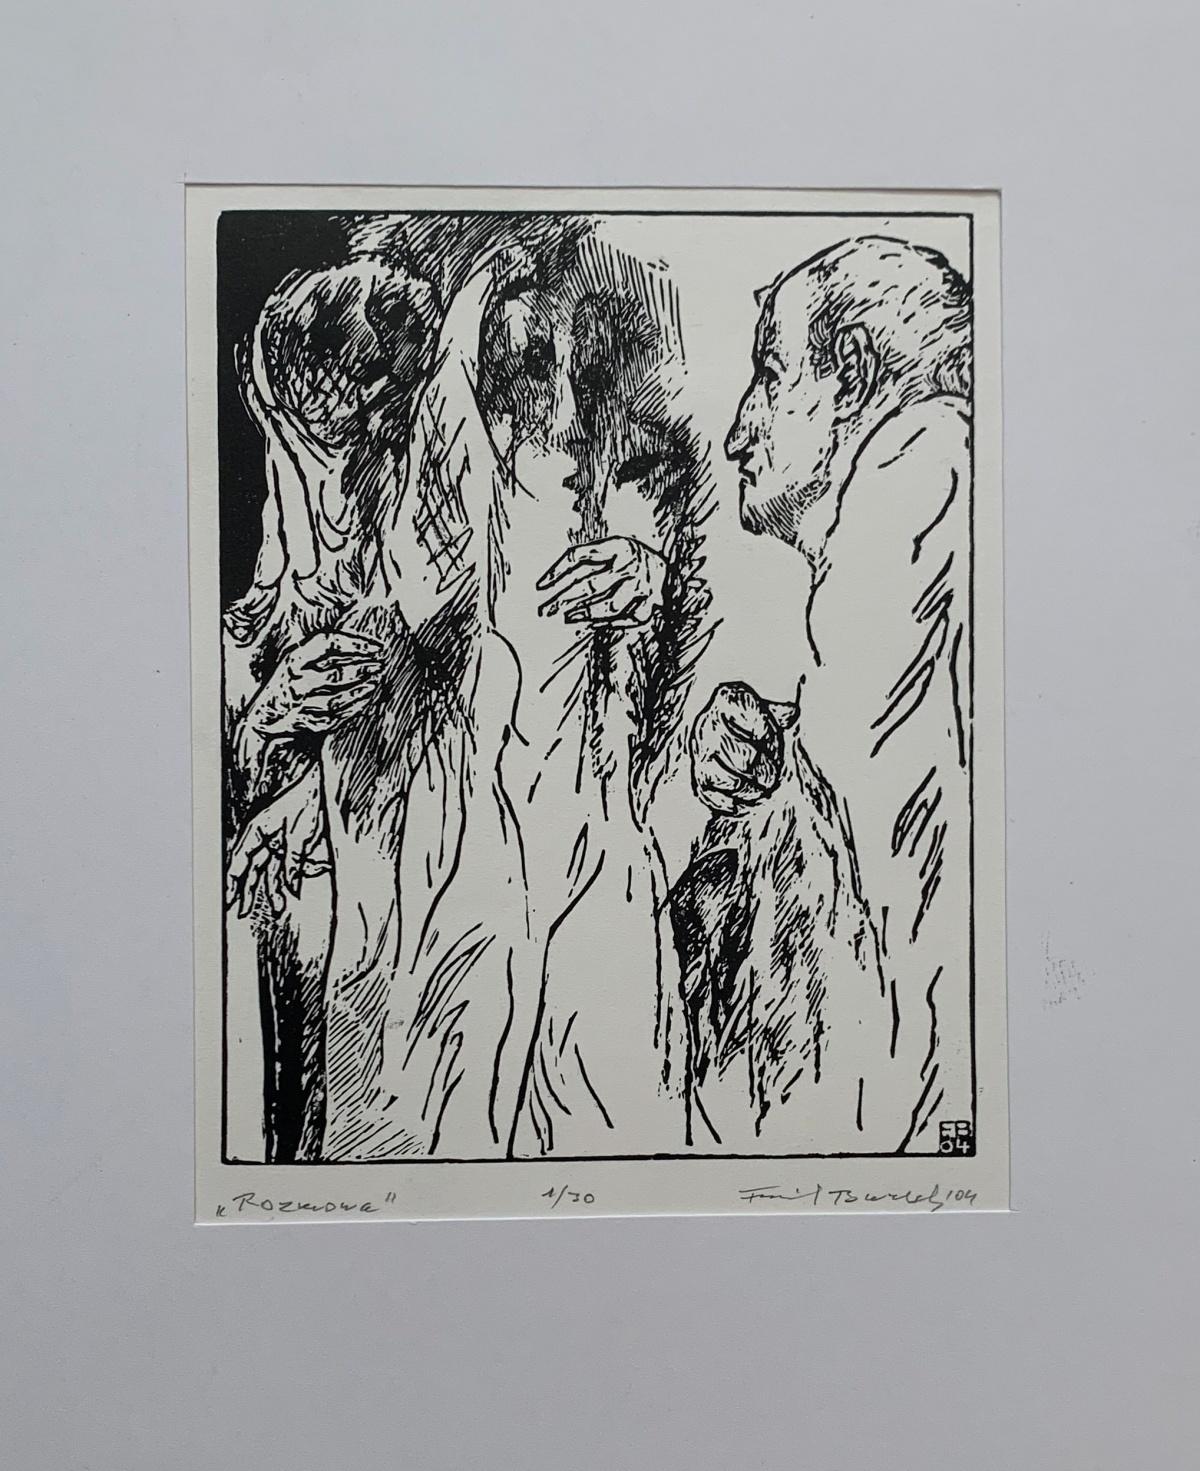 A conversation - Black and white linocut, Figurative - Print by Franciszek Bunsch